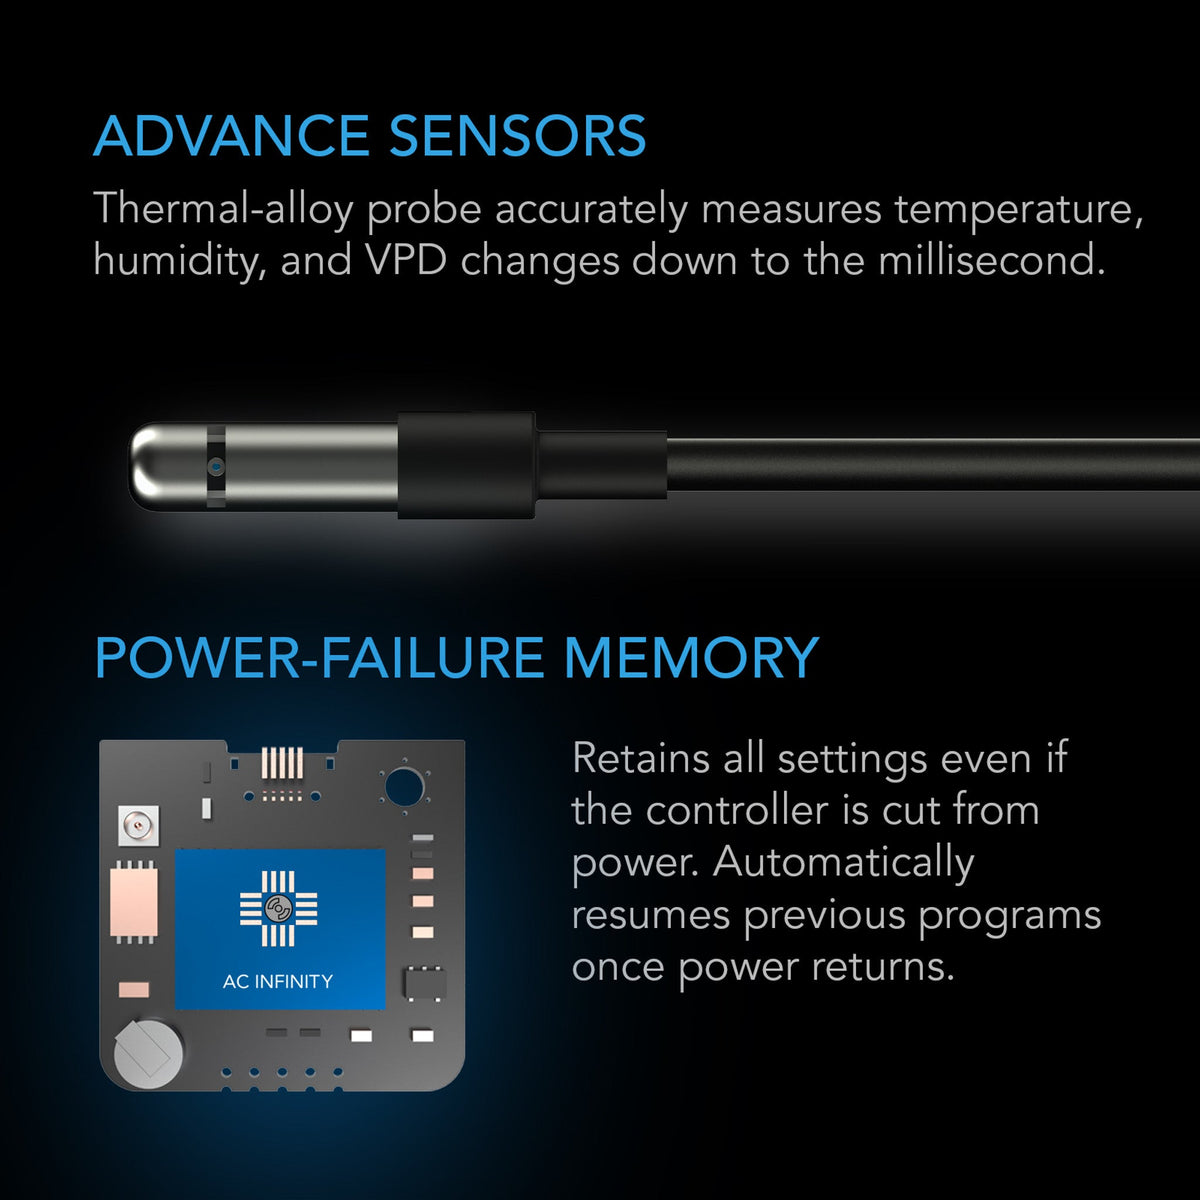 ACInfinity Smart Controller 69Pro Plus Sensors